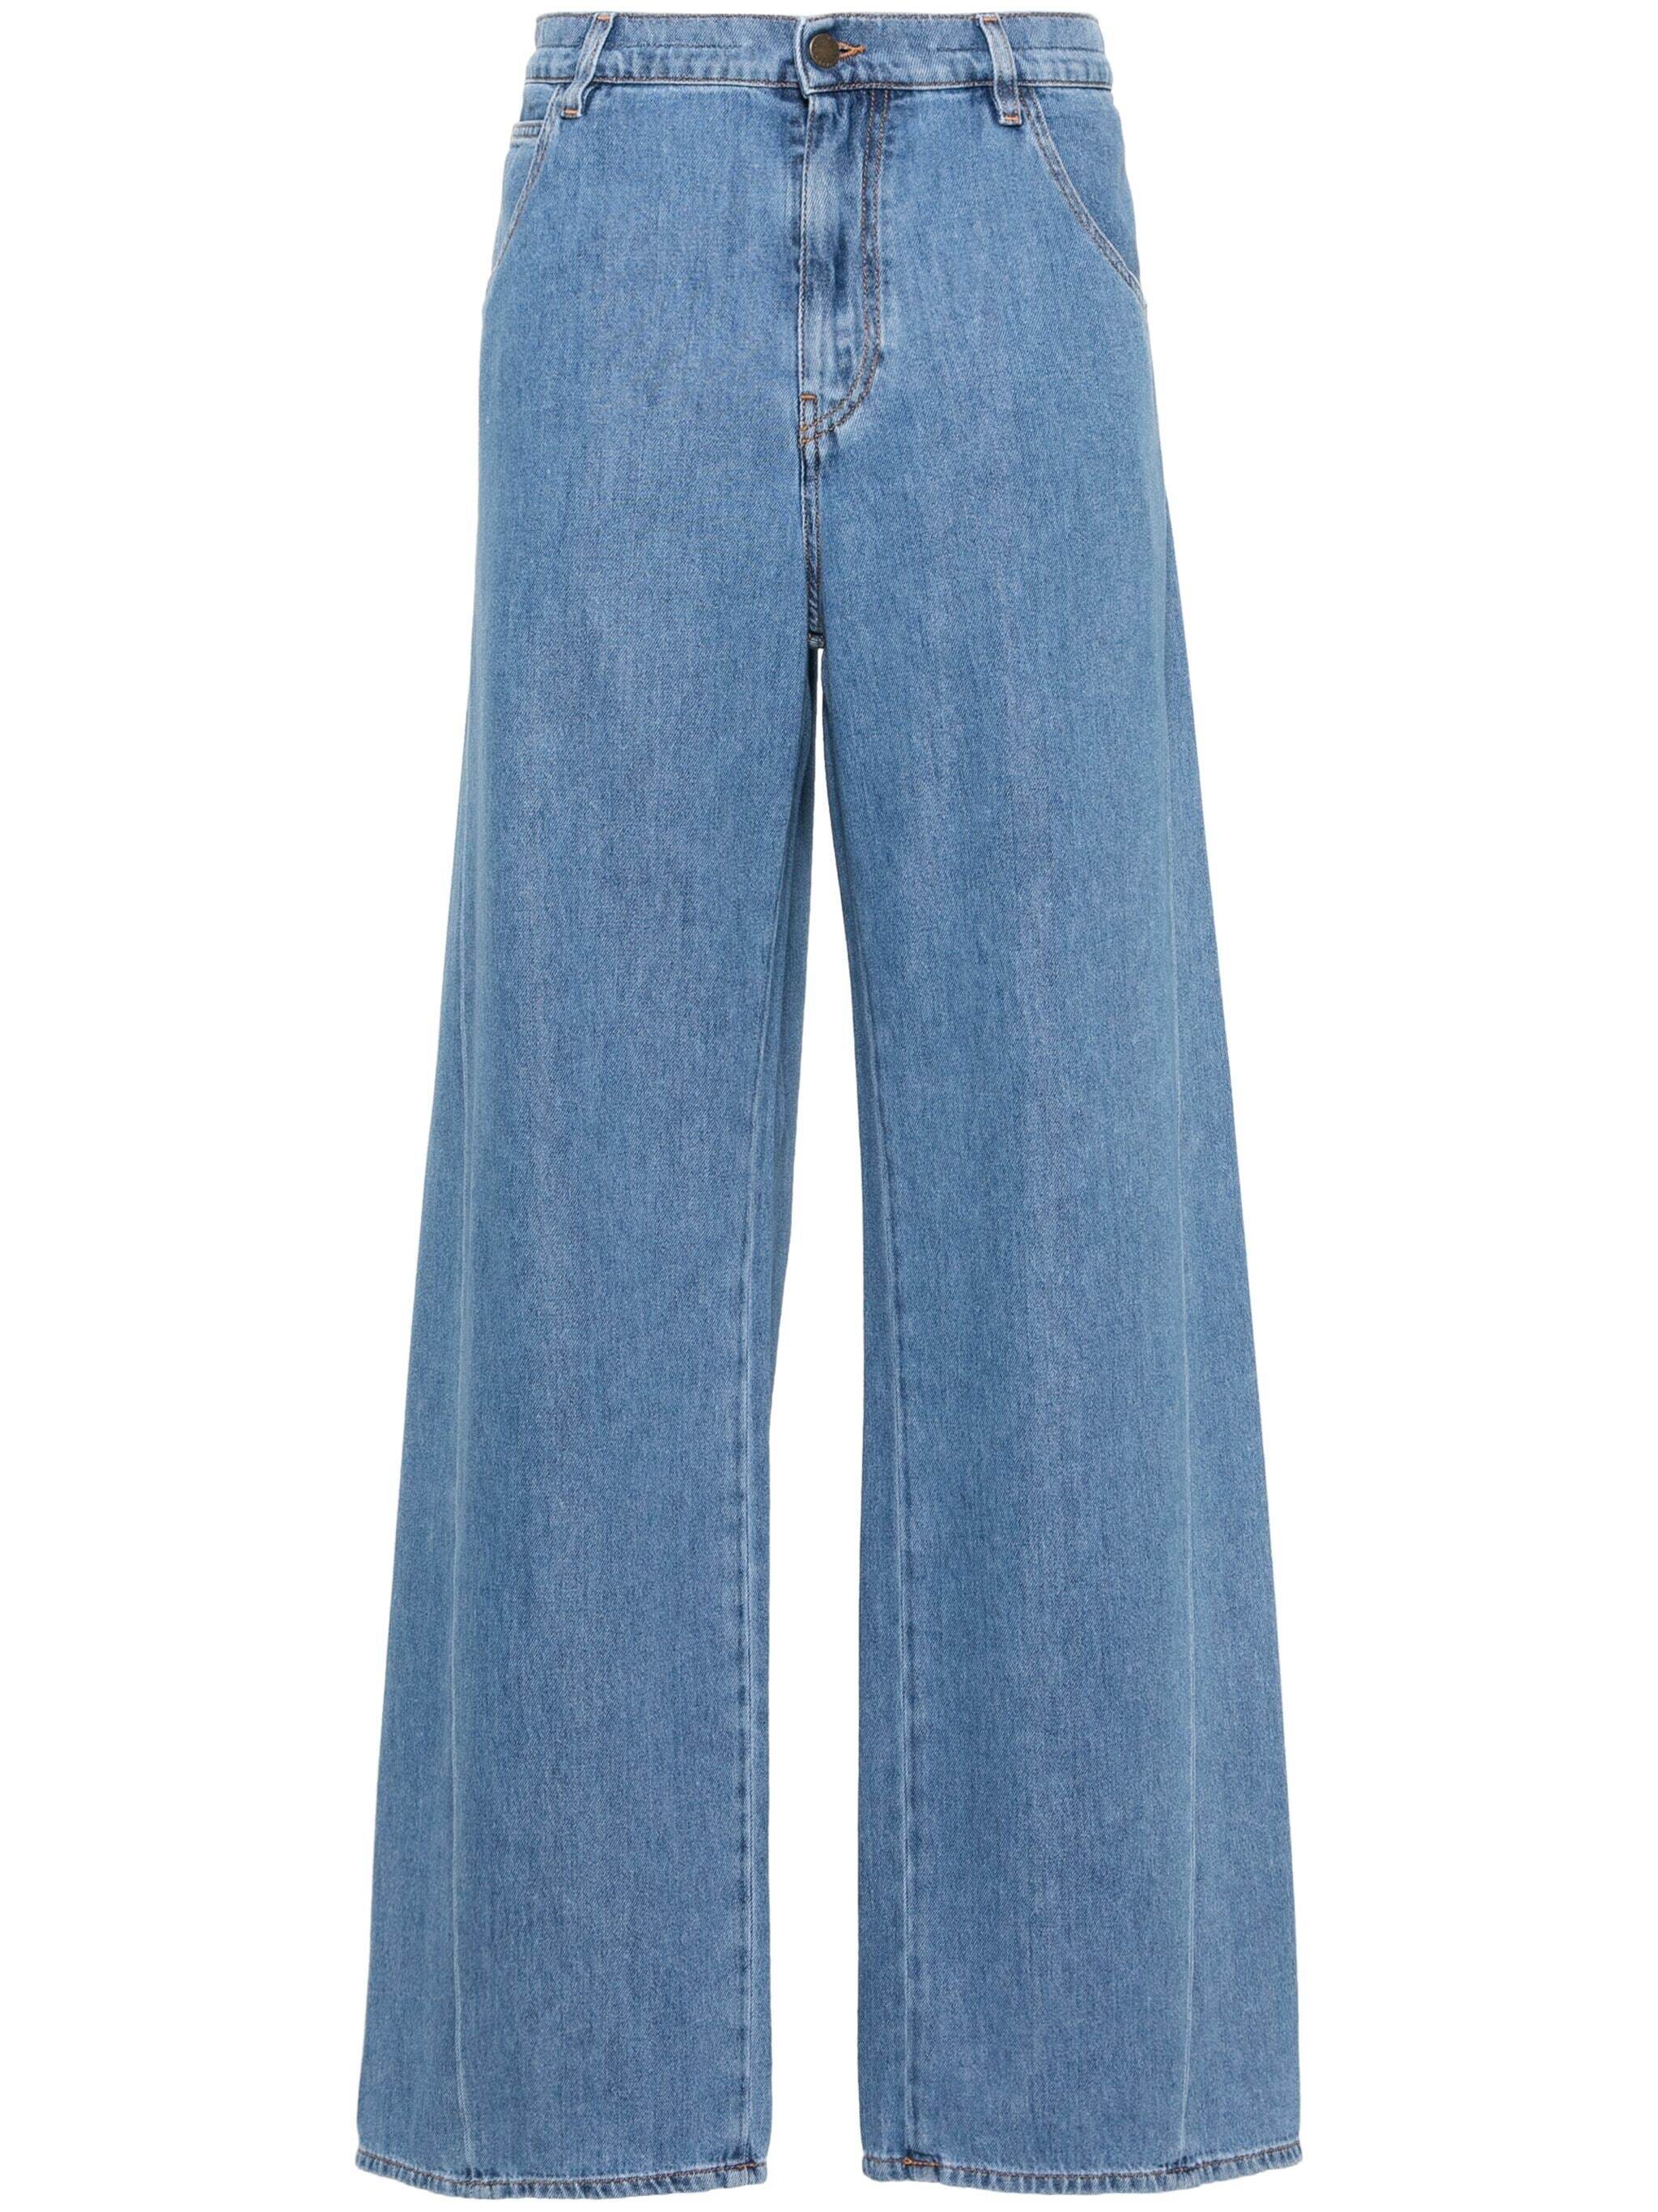 Iris Paperbag Jeans